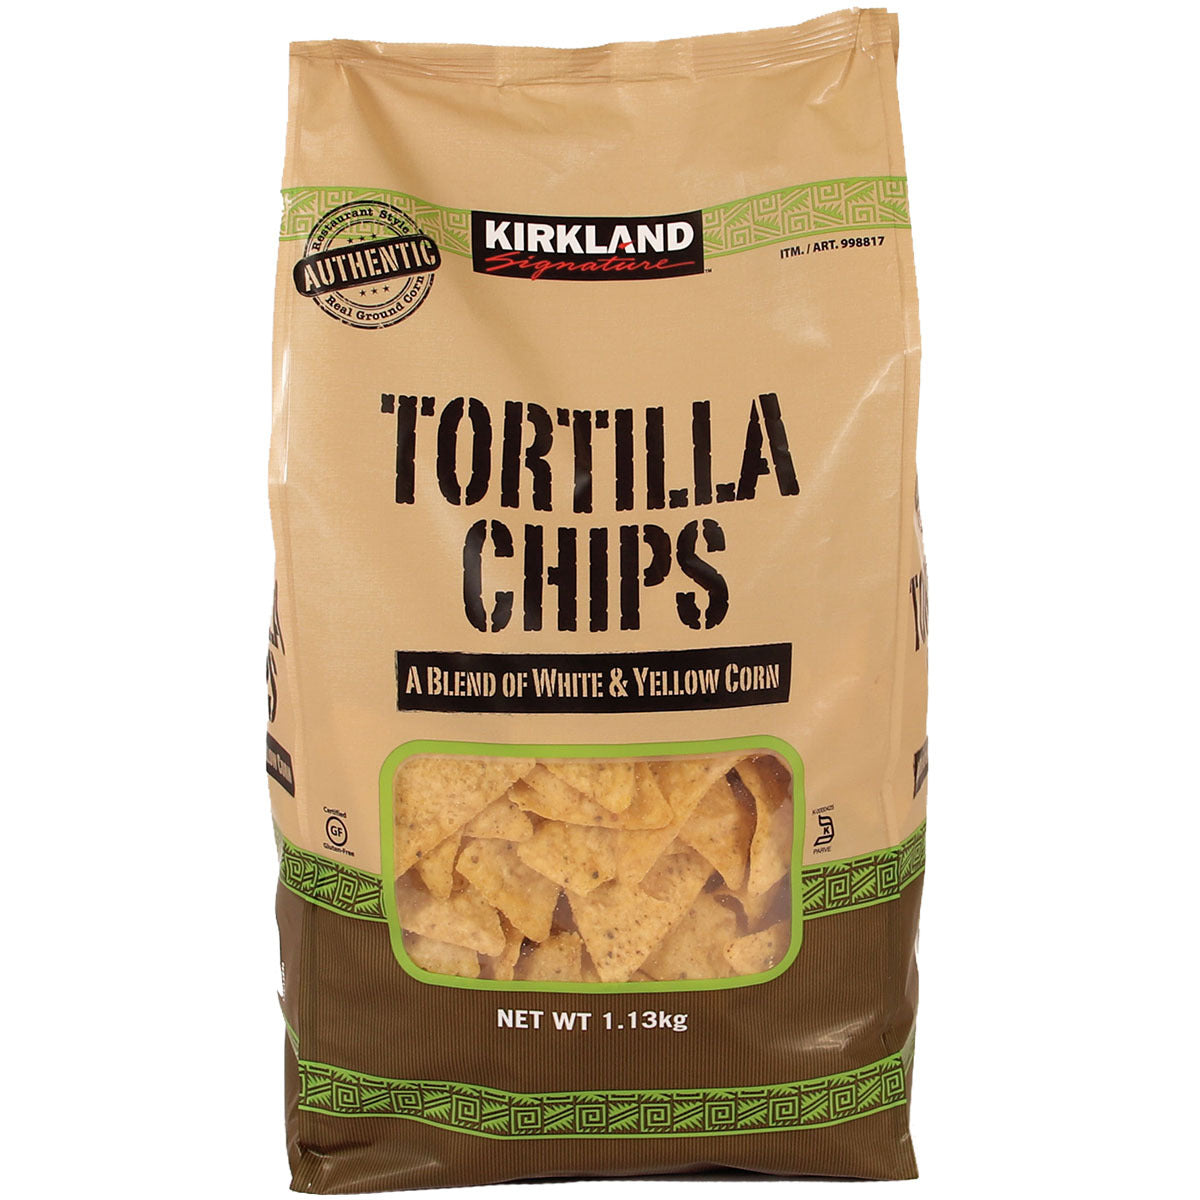 Kirkland Signature Tortilla Chips 1.13kg - Crunchy Fiesta in Every Bite